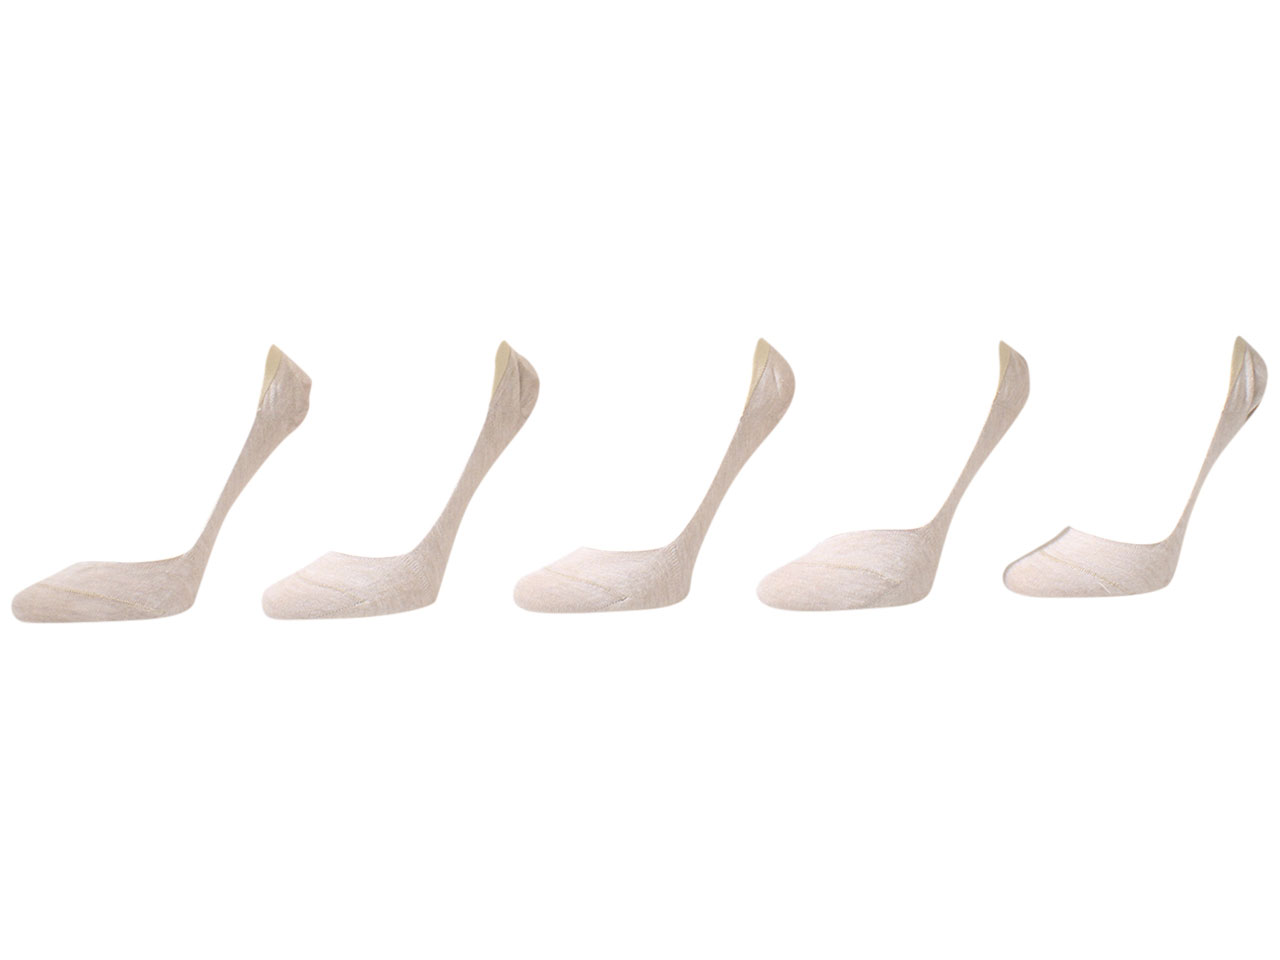 https://www.joylot.com/gallery-option/554277924/1/lauren-by-ralph-lauren-womens-socks-flat-knit-liners-no-show-5-pairs-oatmeal-heather-1.jpg